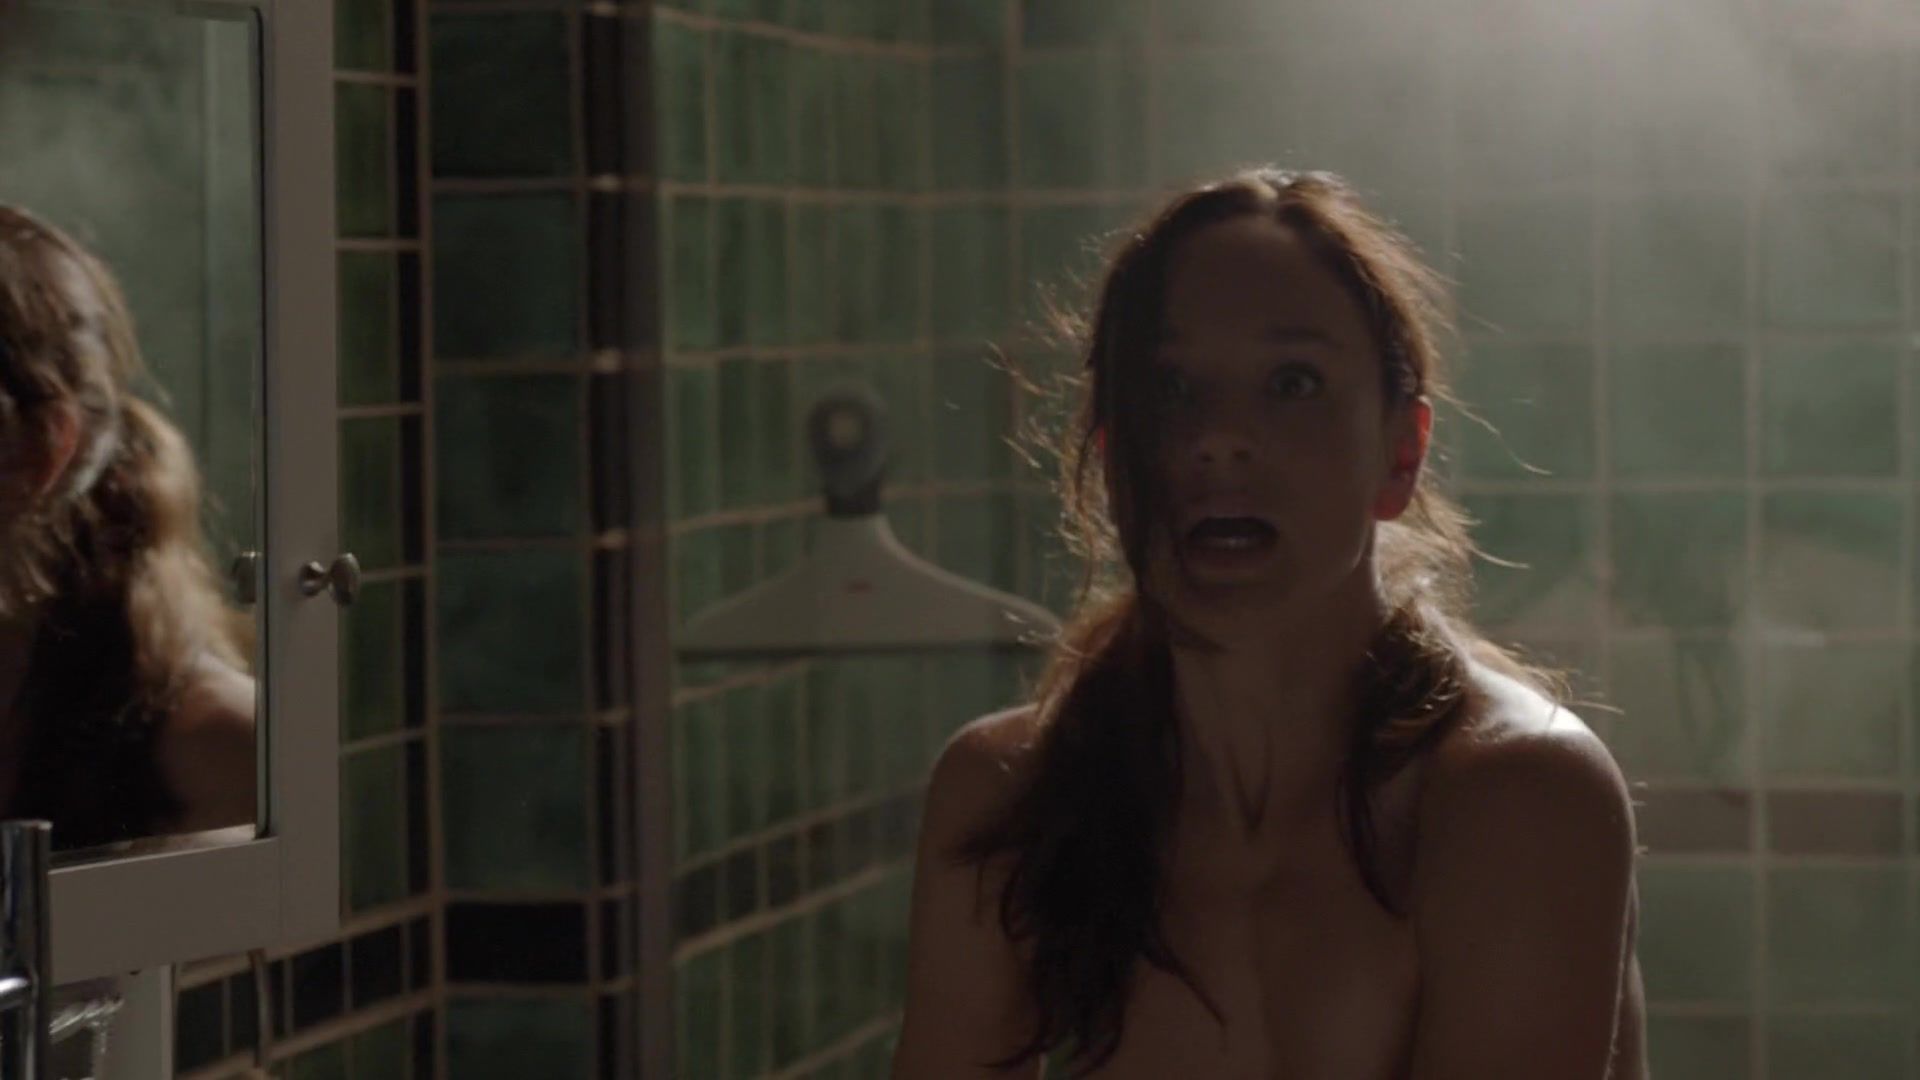 Flaca Naked Sarah Wayne Callies in Sex Scene from the TV show "Colony" s01e03 (2016) Hard Sex